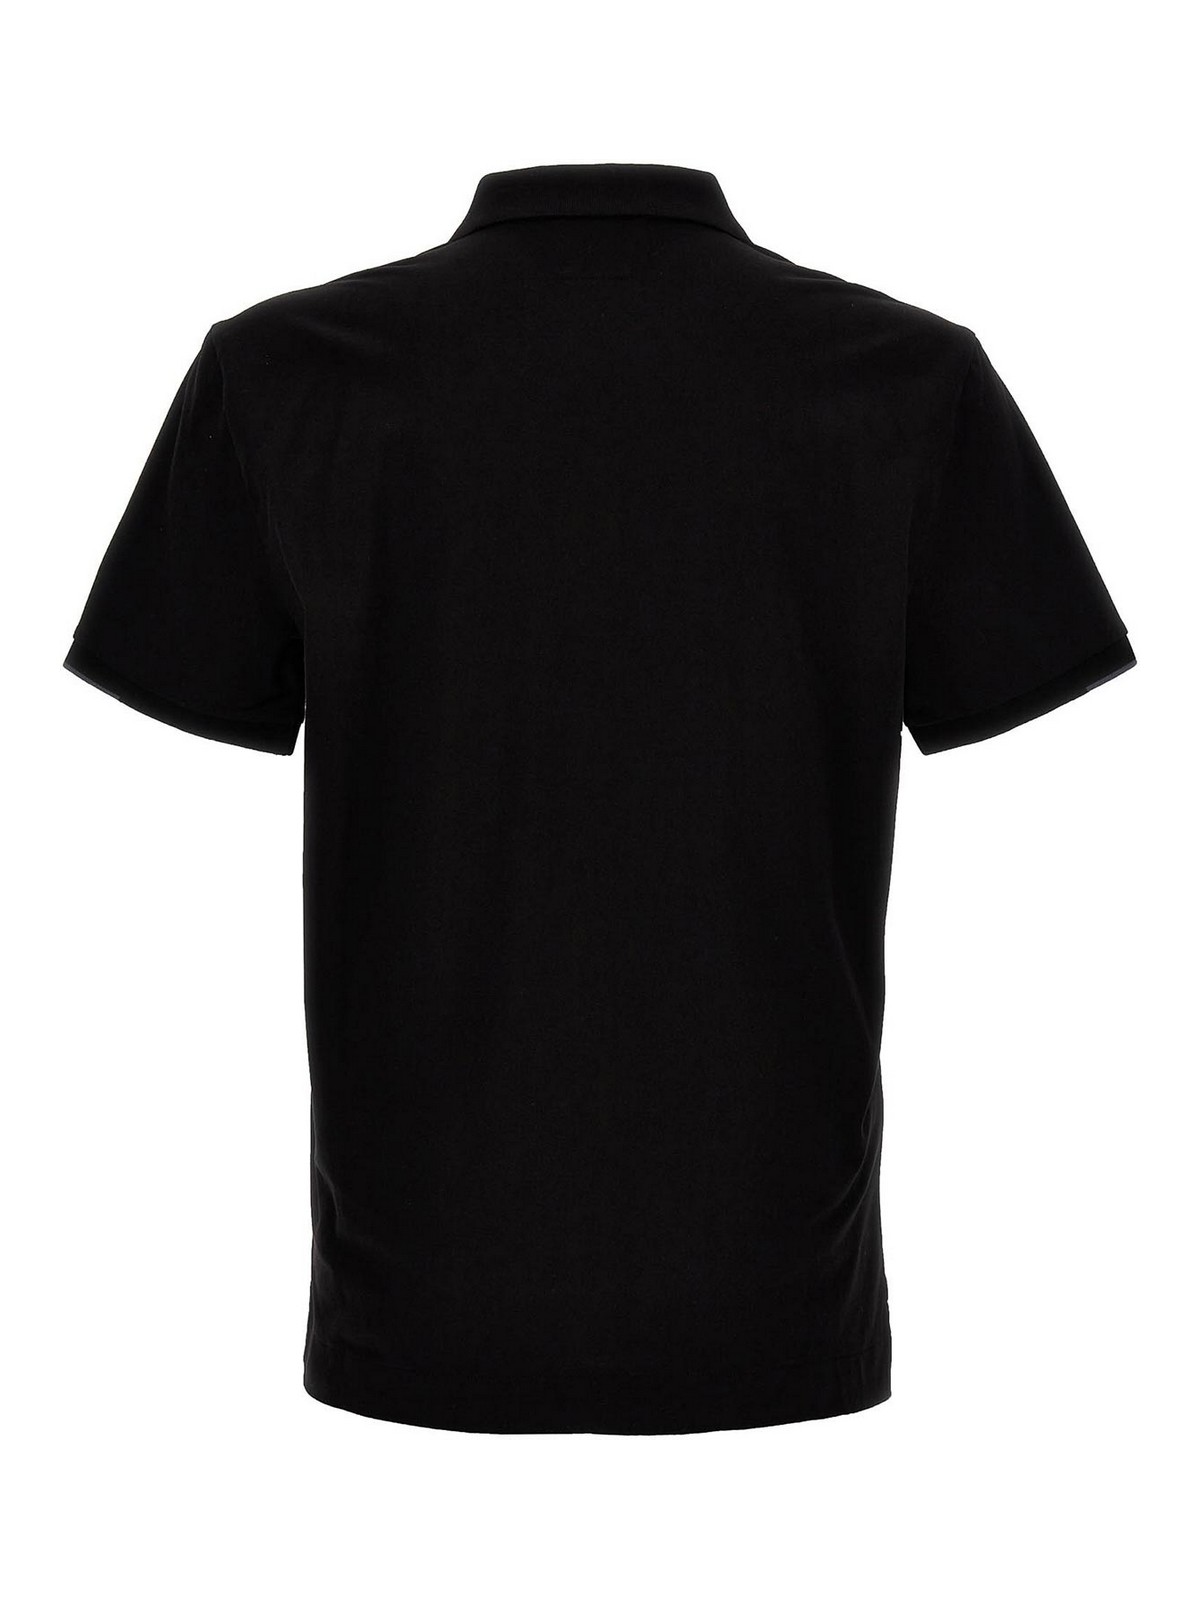 Shop C.p. Company The Metropolis Series Polo Shirt In Black